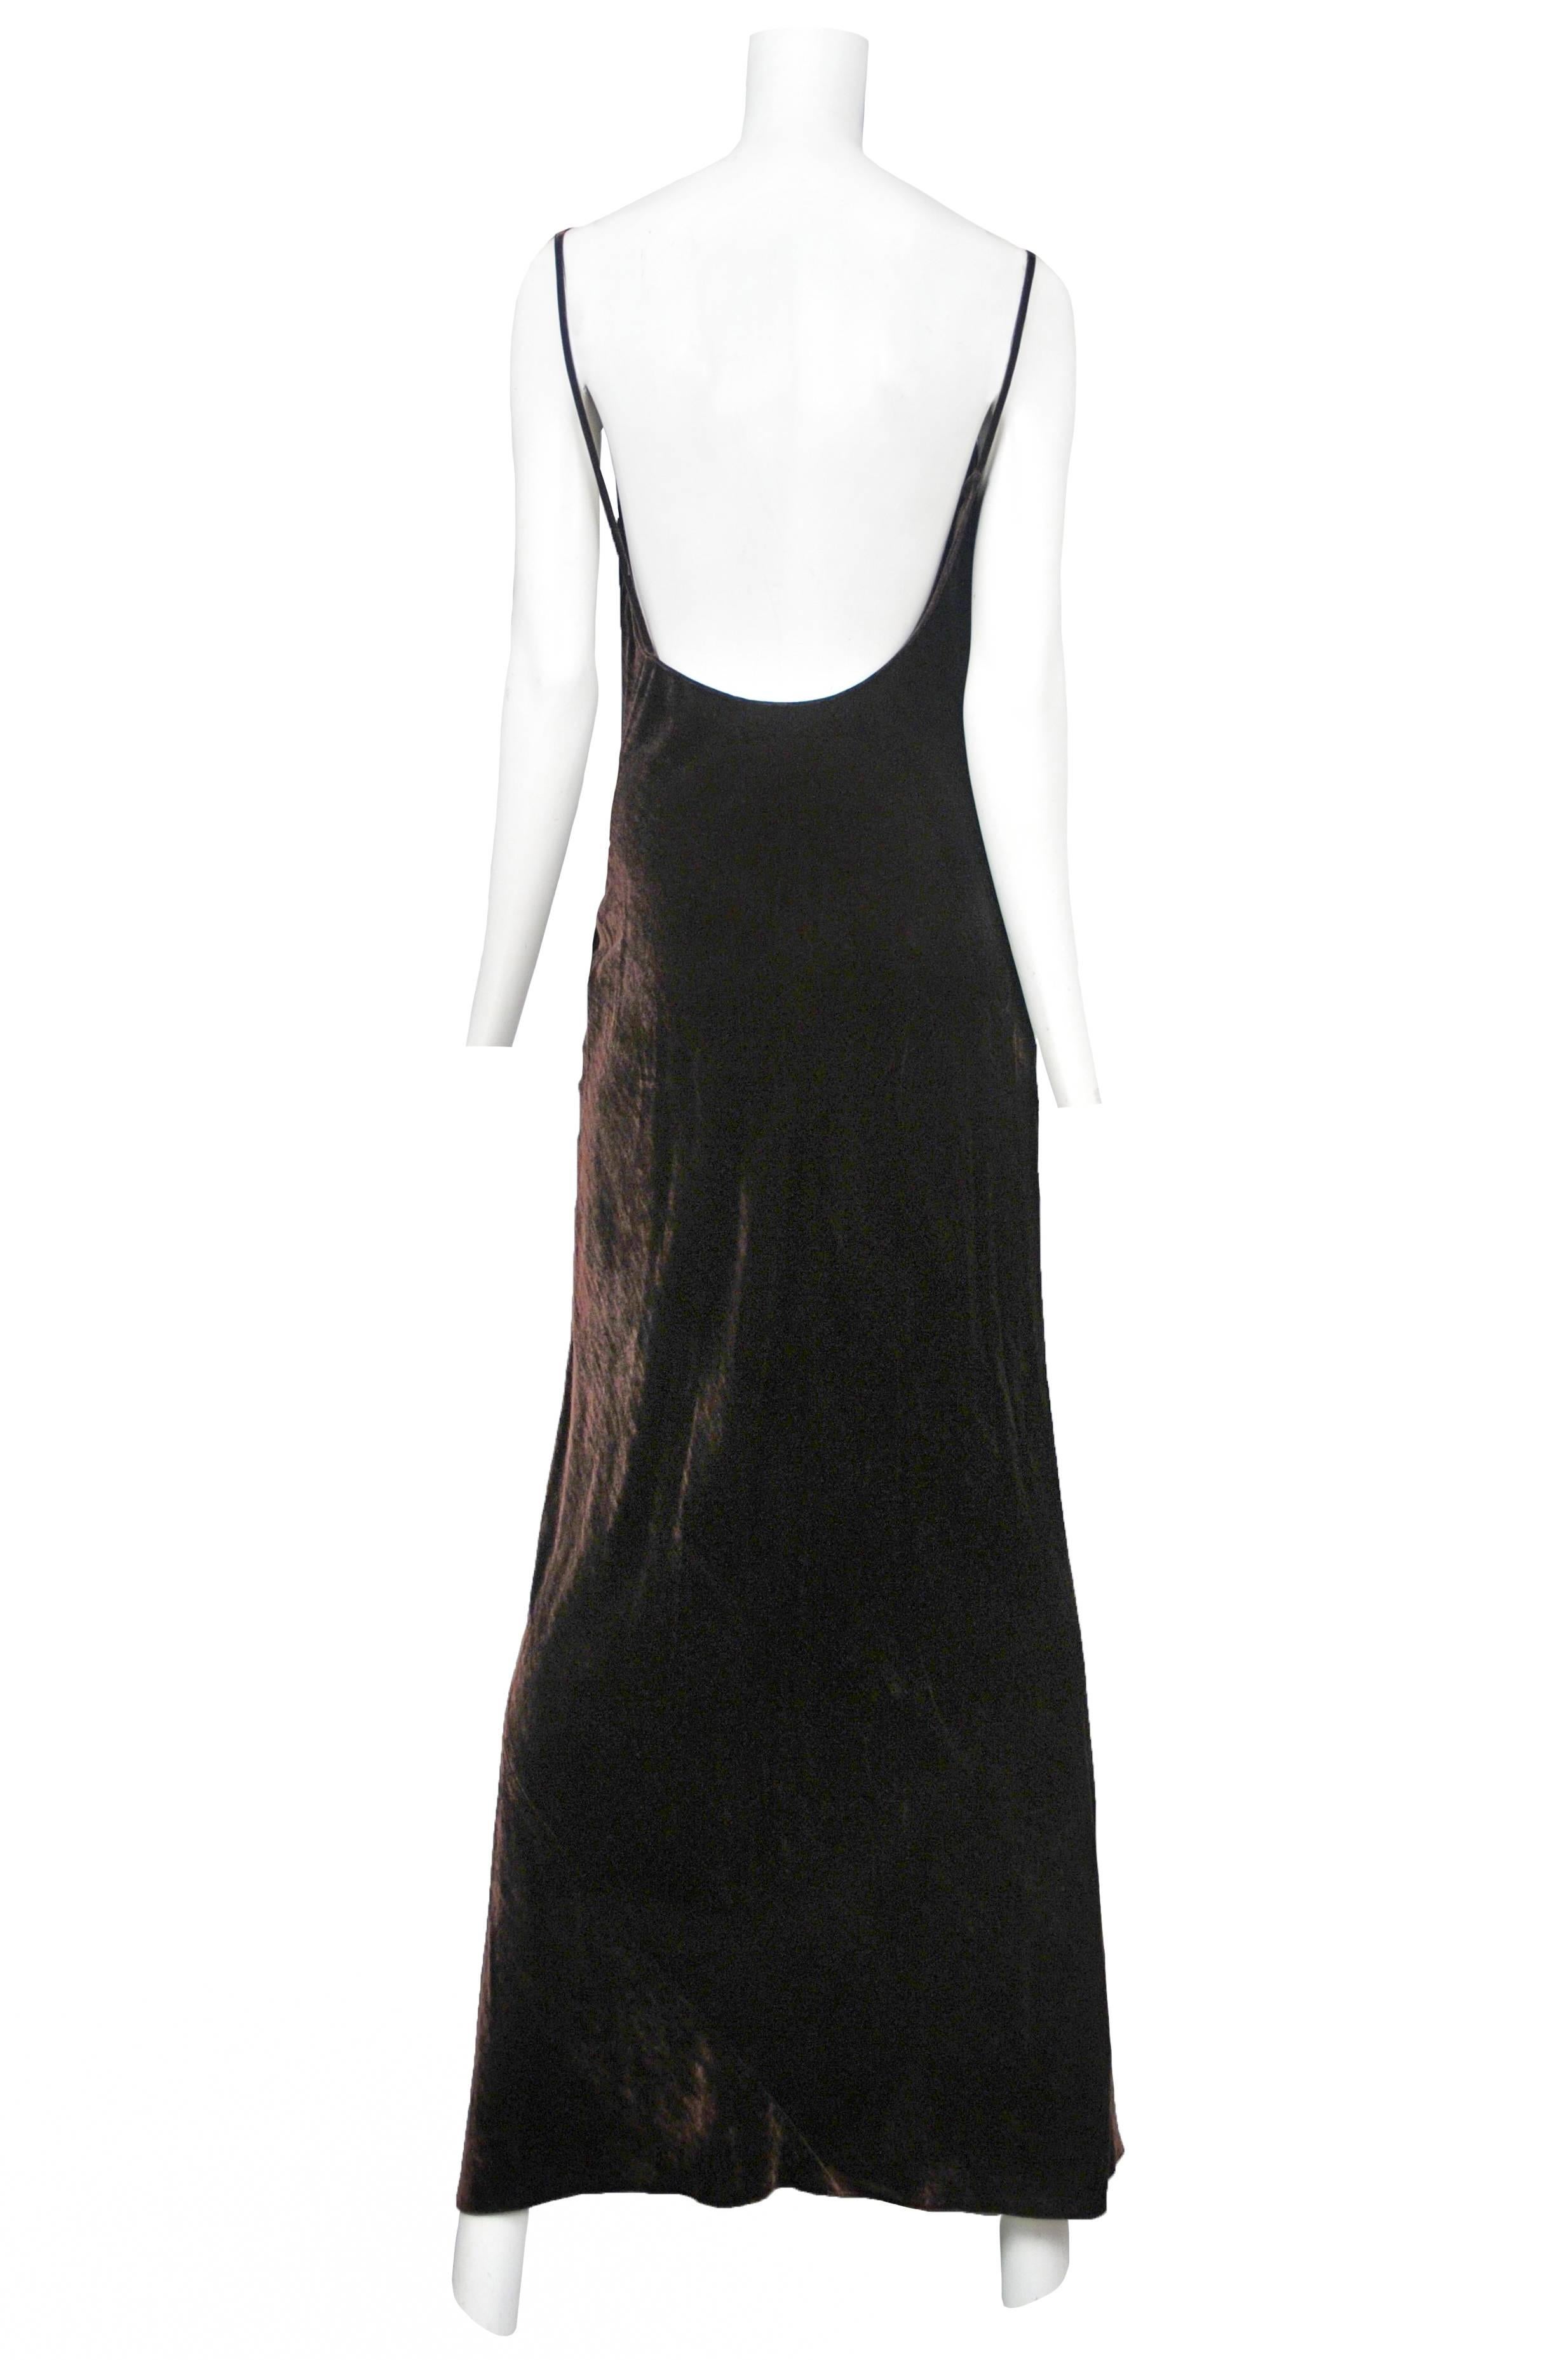 Vintage Donna Karan dark brown bias cut velvet gown featuring spaghetti straps, a cowl neckline and an open back.
